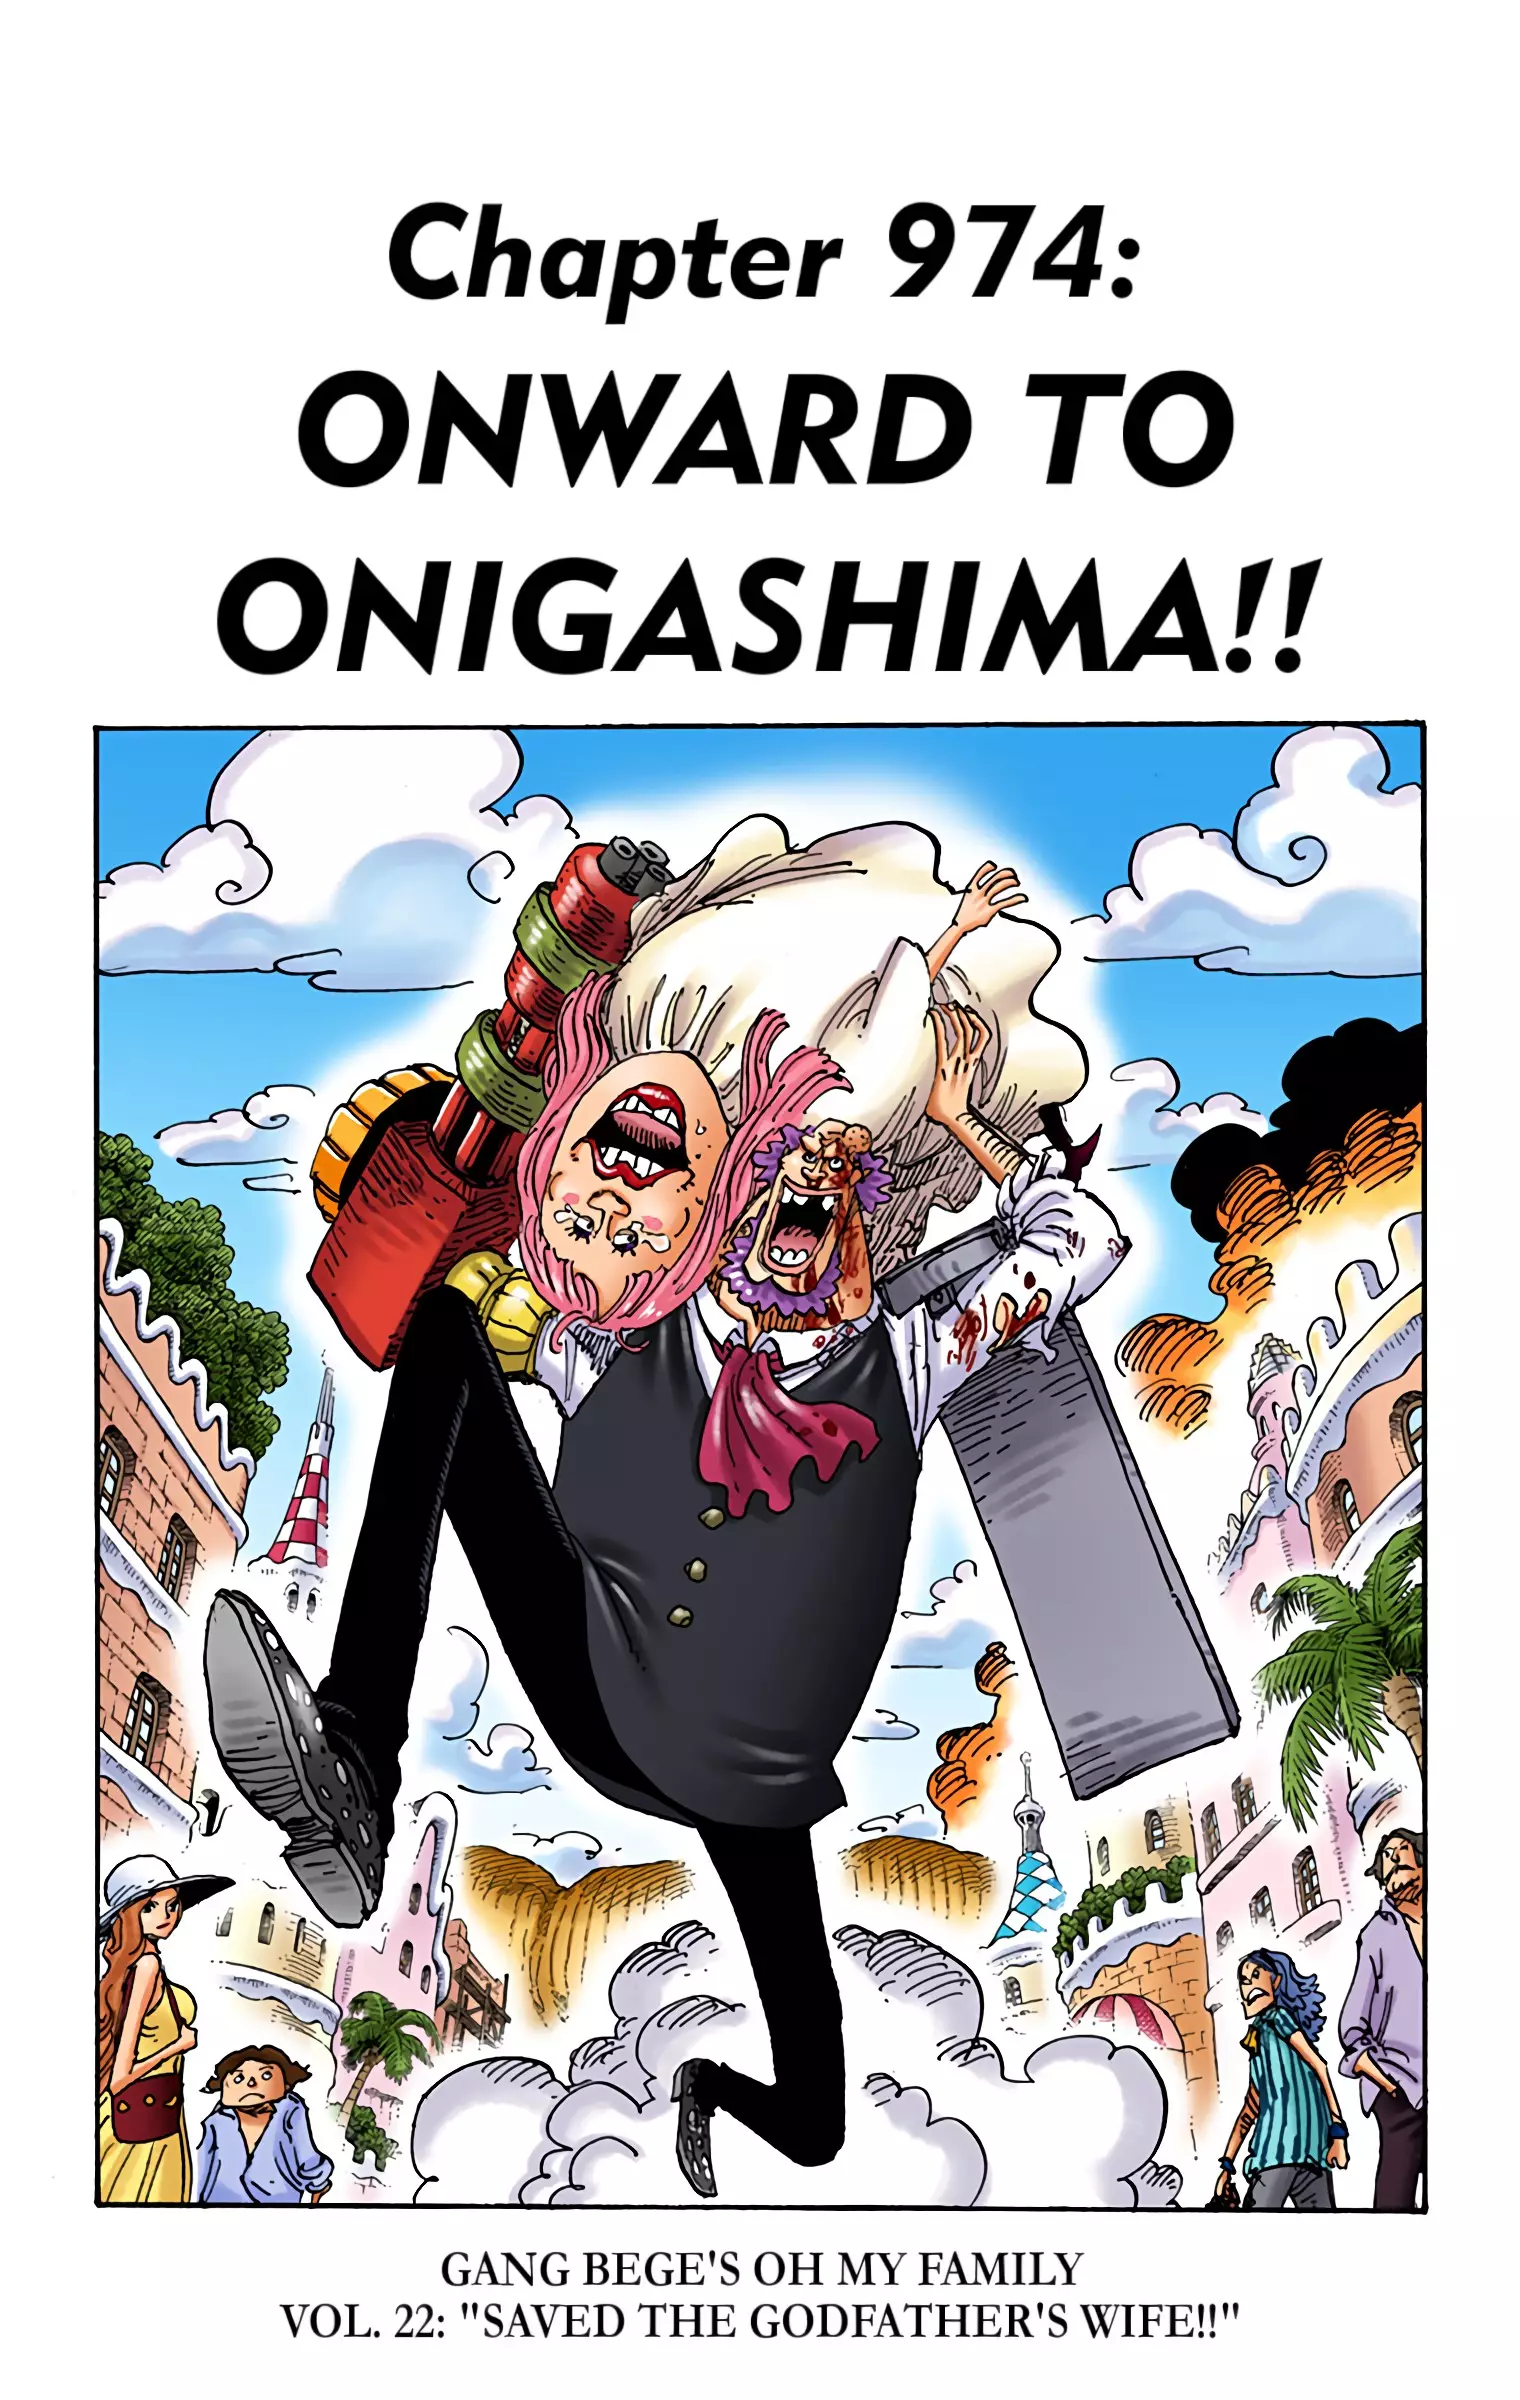 One Piece - Digital Colored Comics - 974 page 1-9249b5a0